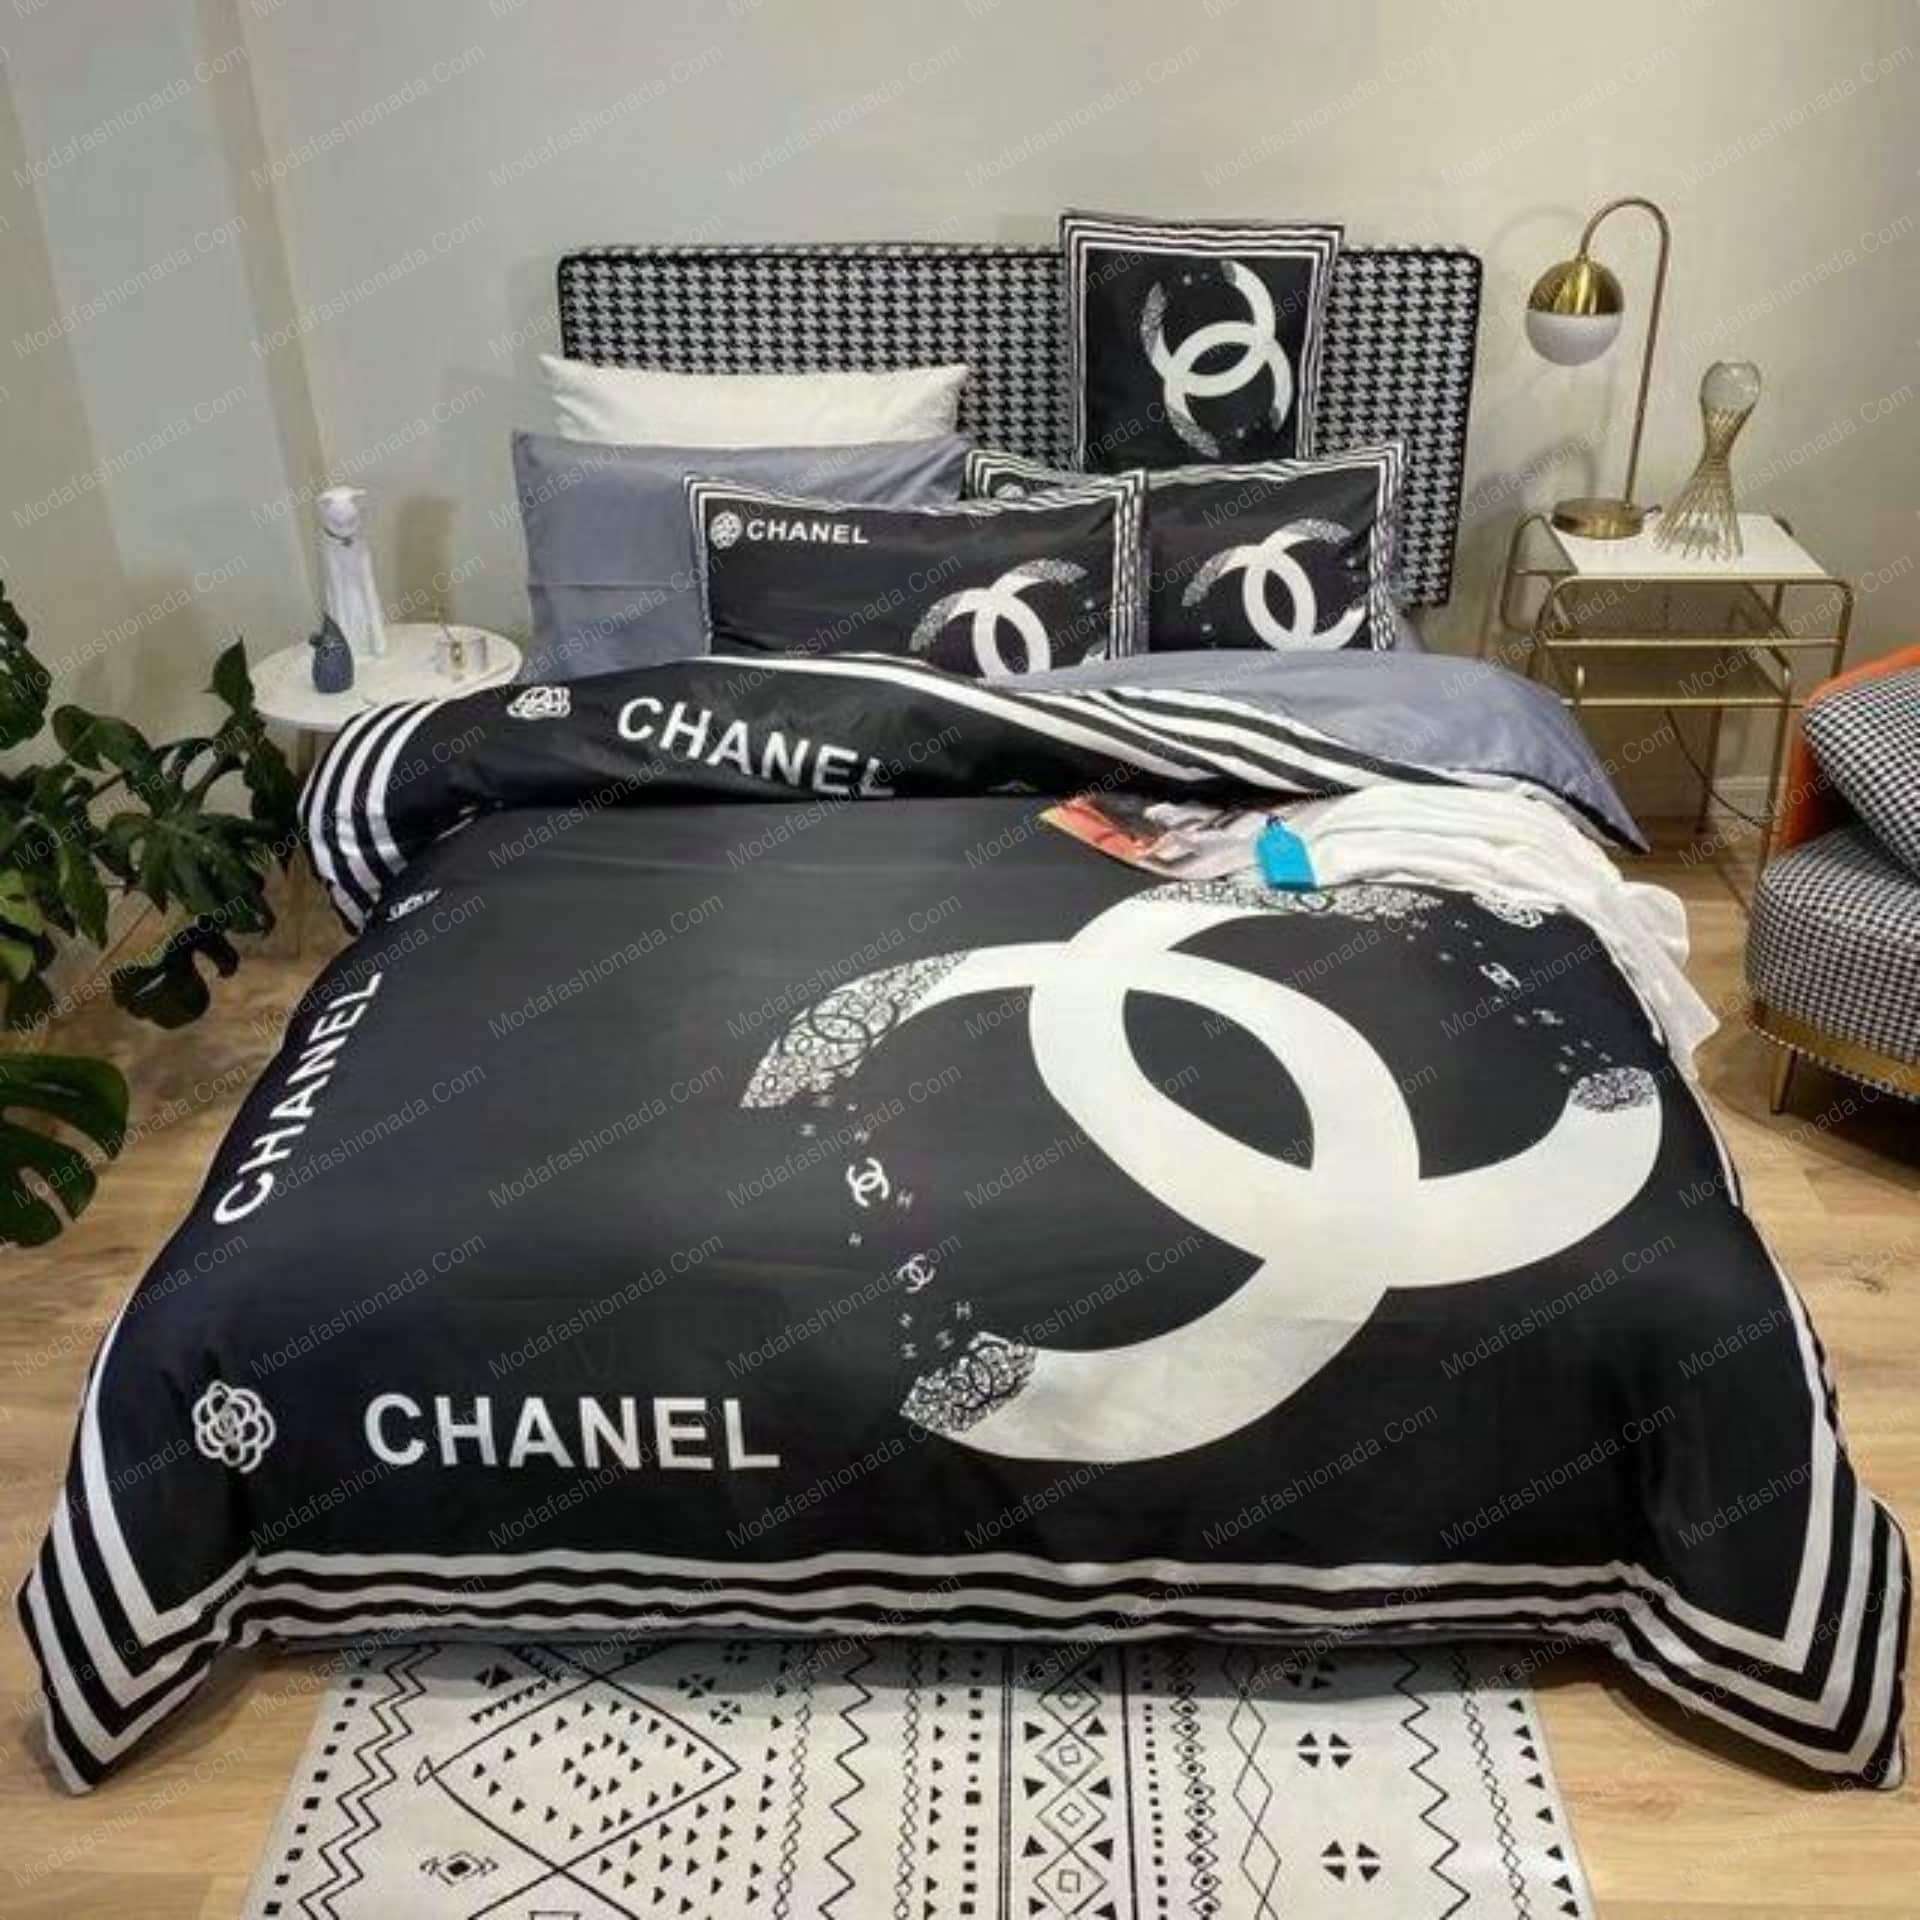 Buy Luxury Chanel Brands 1 Bedding Set Bed Sets